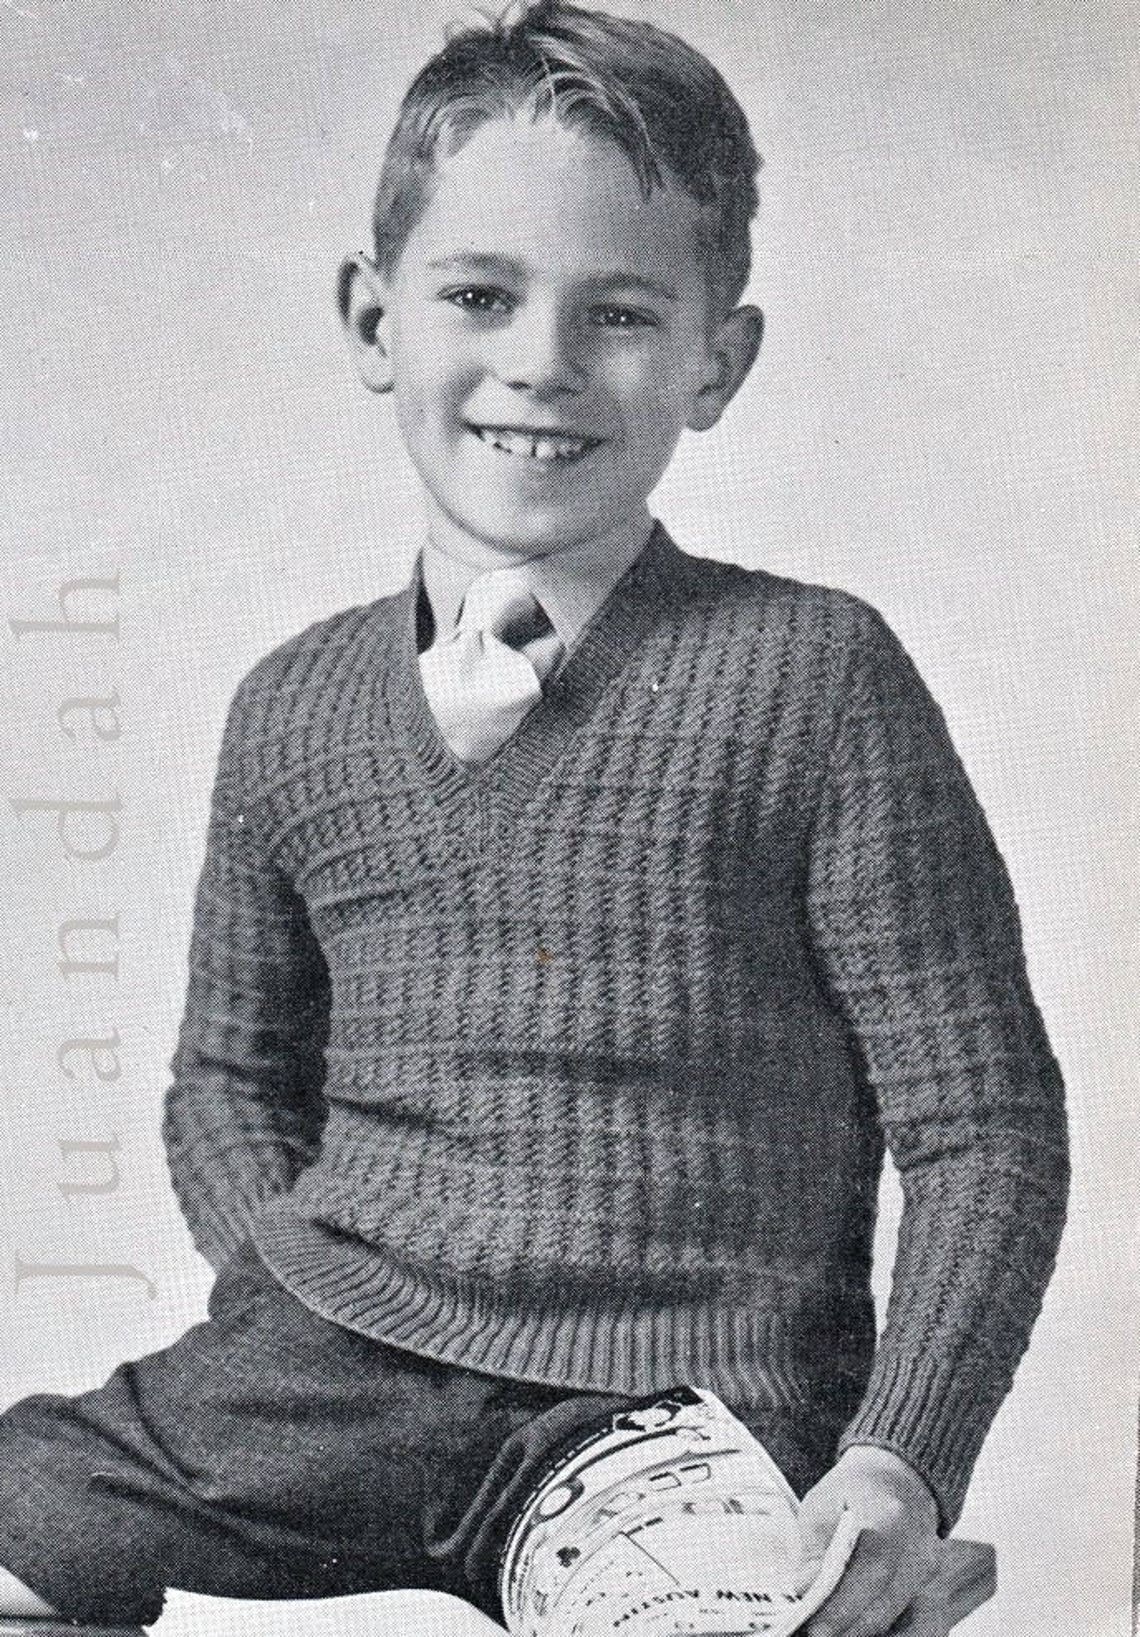 Boys Knitting Patterns Entire PDF Book of 1950s - Etsy